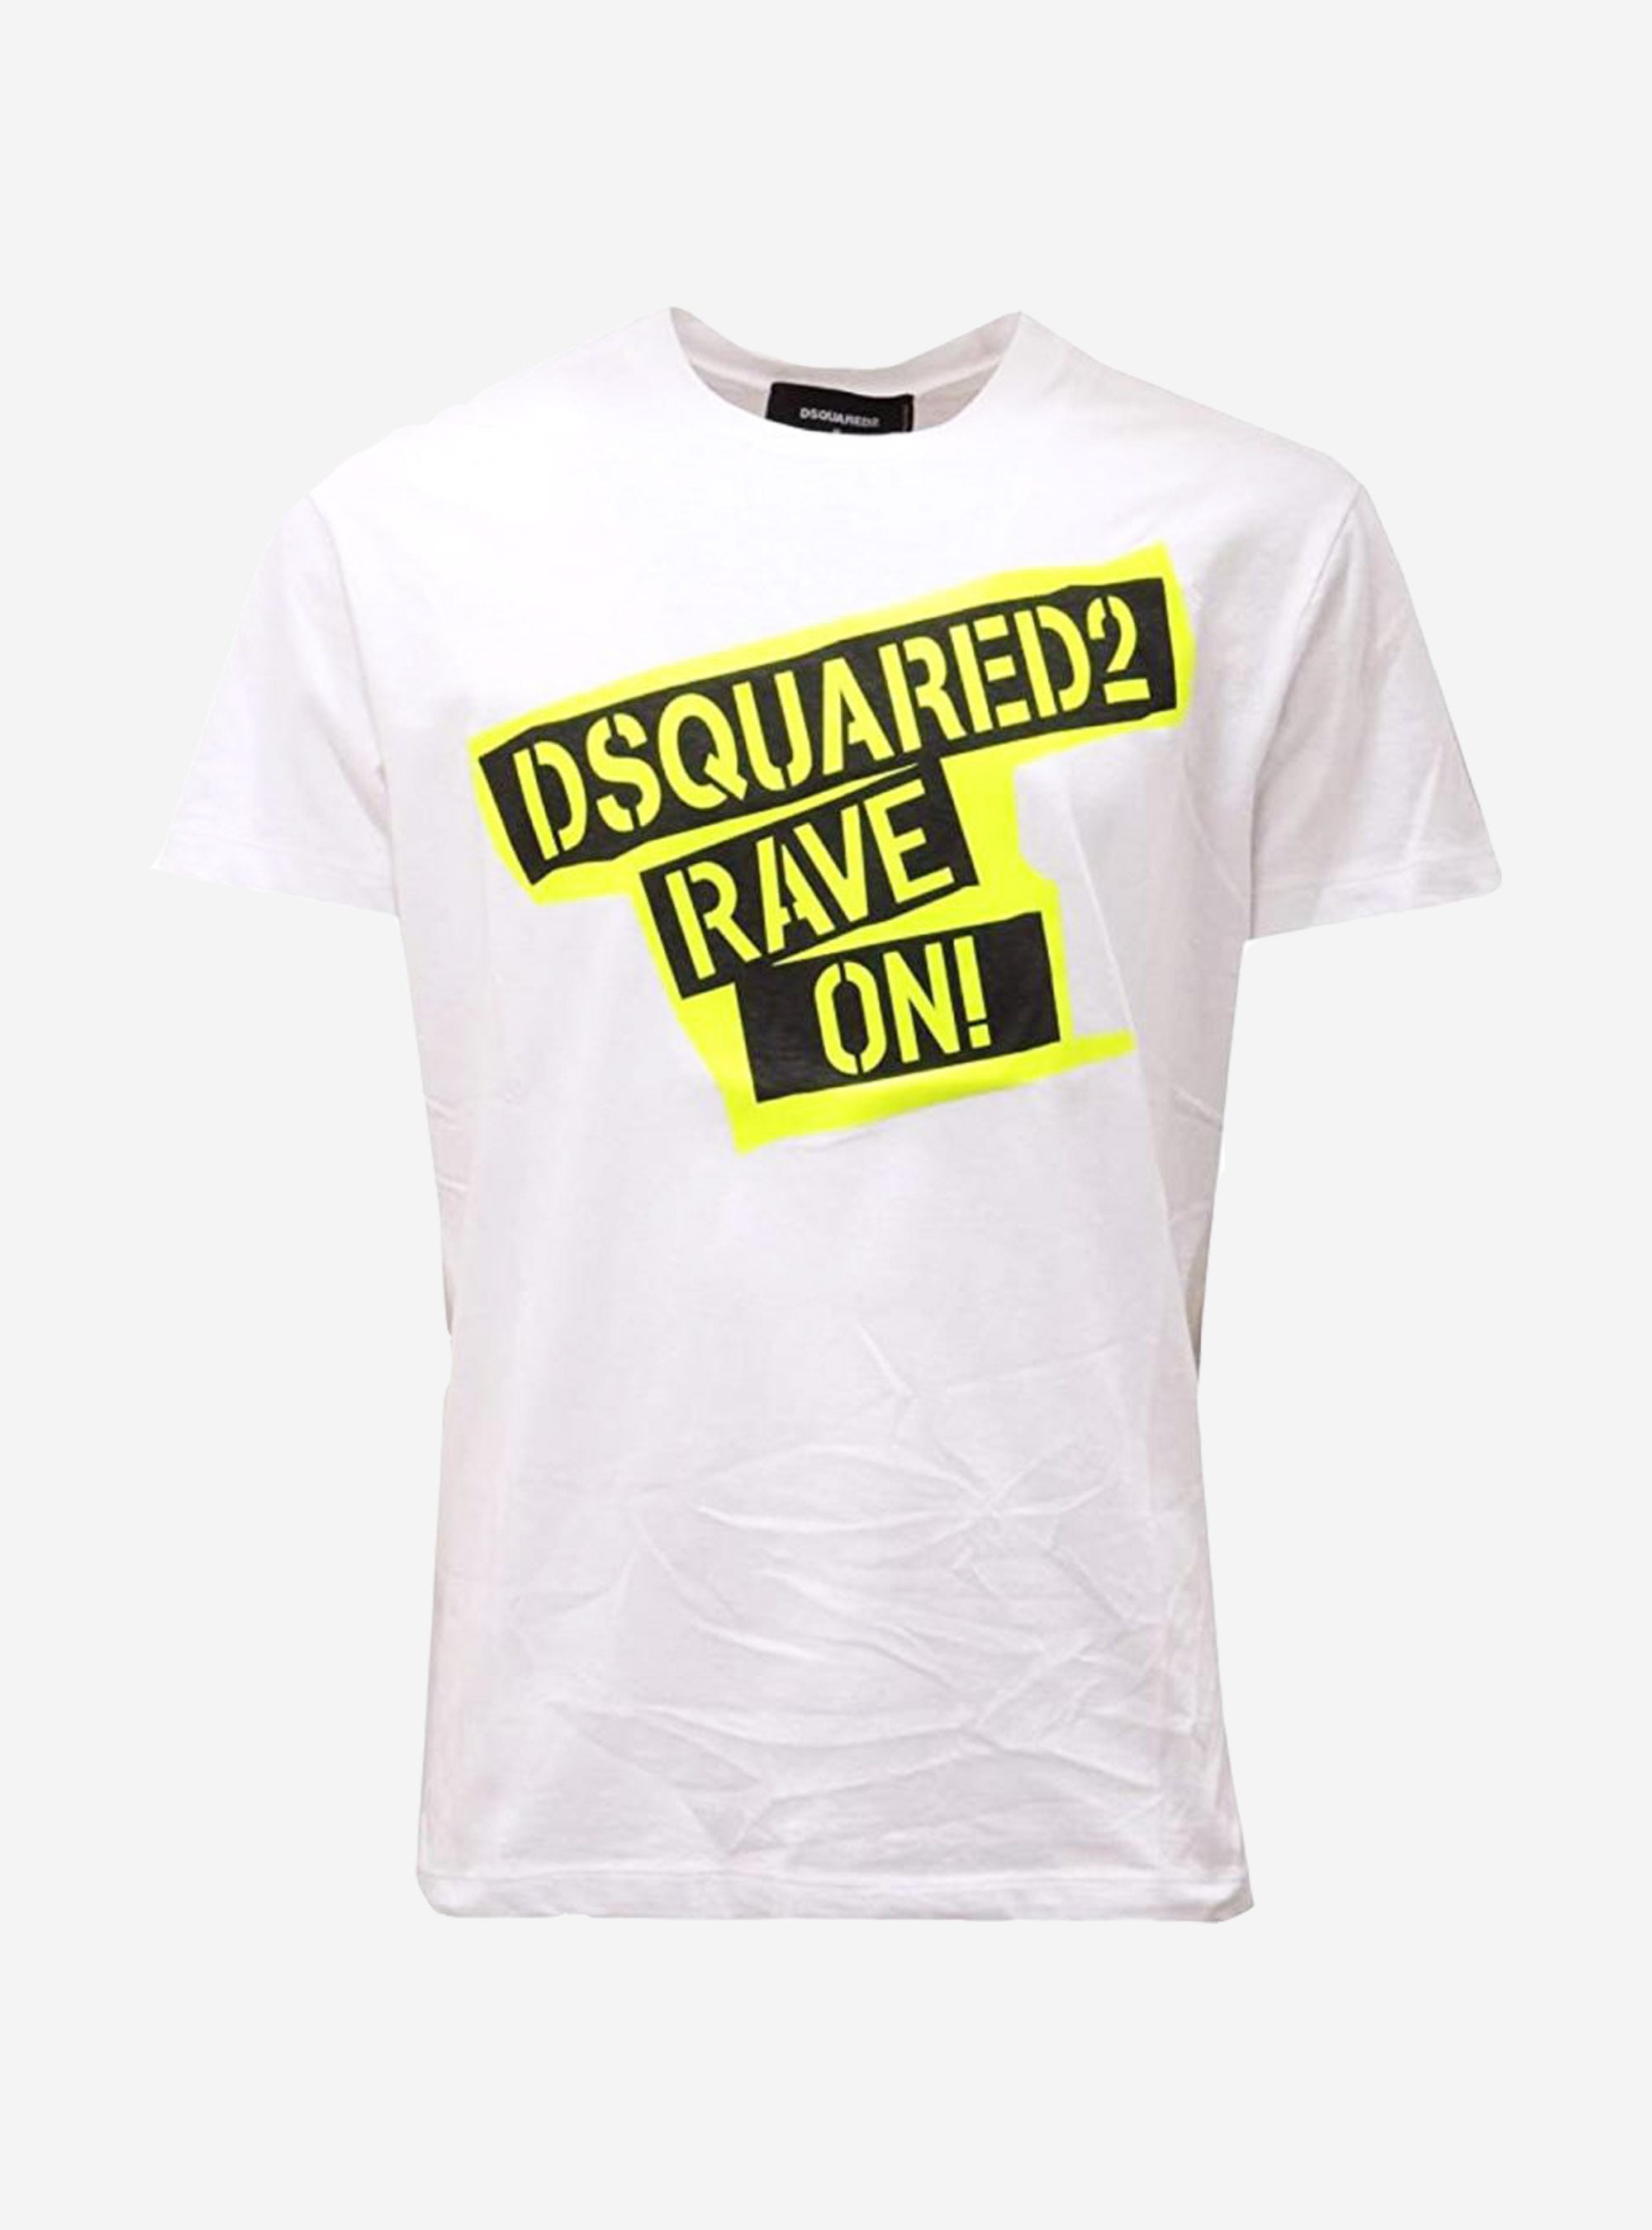 T-shirt Uomo Dsquared2 Rave